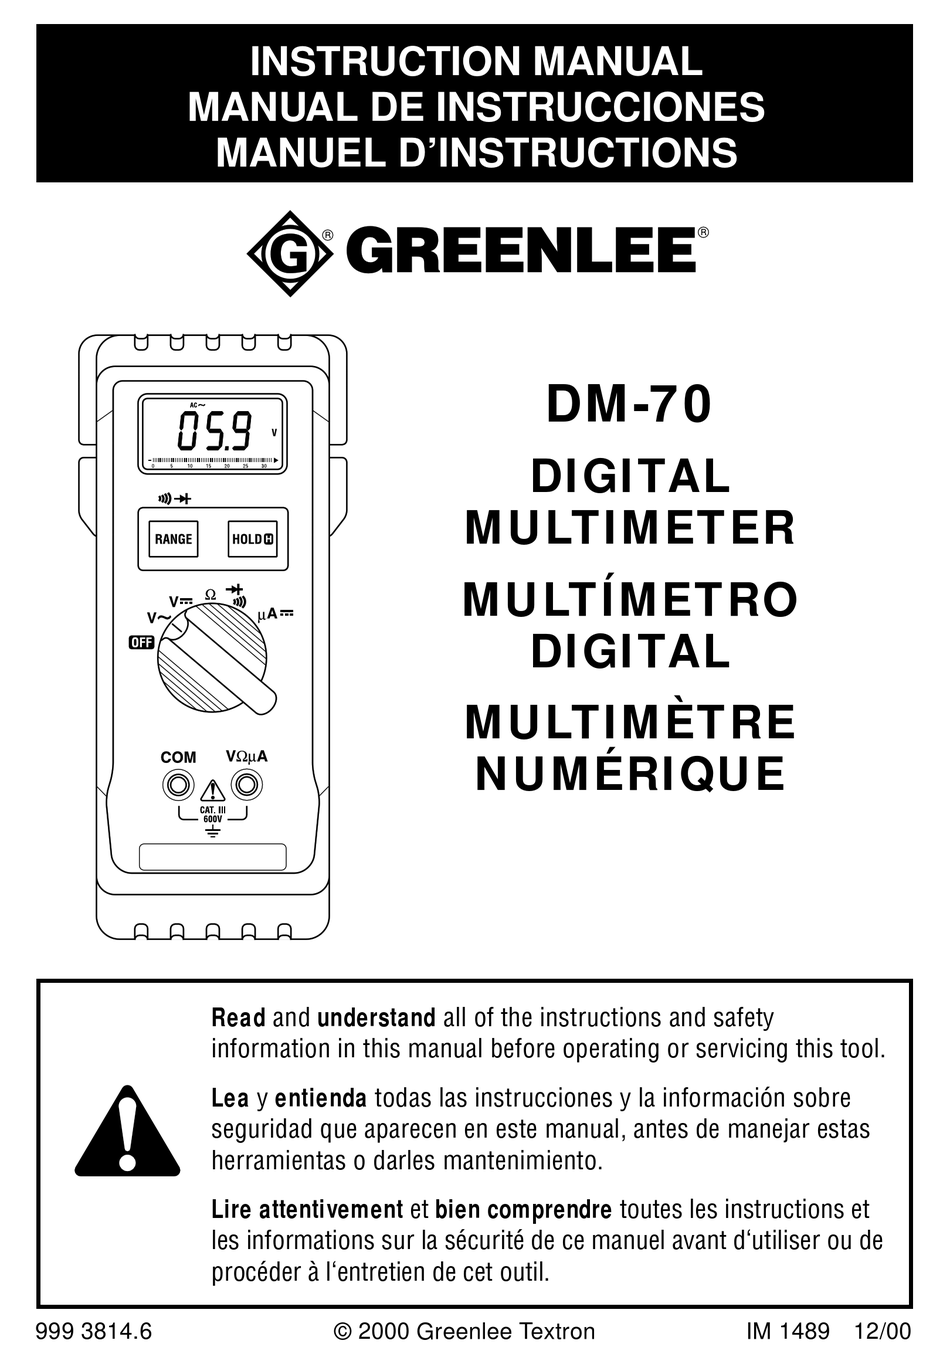 GREENLEE DM-70 INSTRUCTION MANUAL Pdf Download | ManualsLib